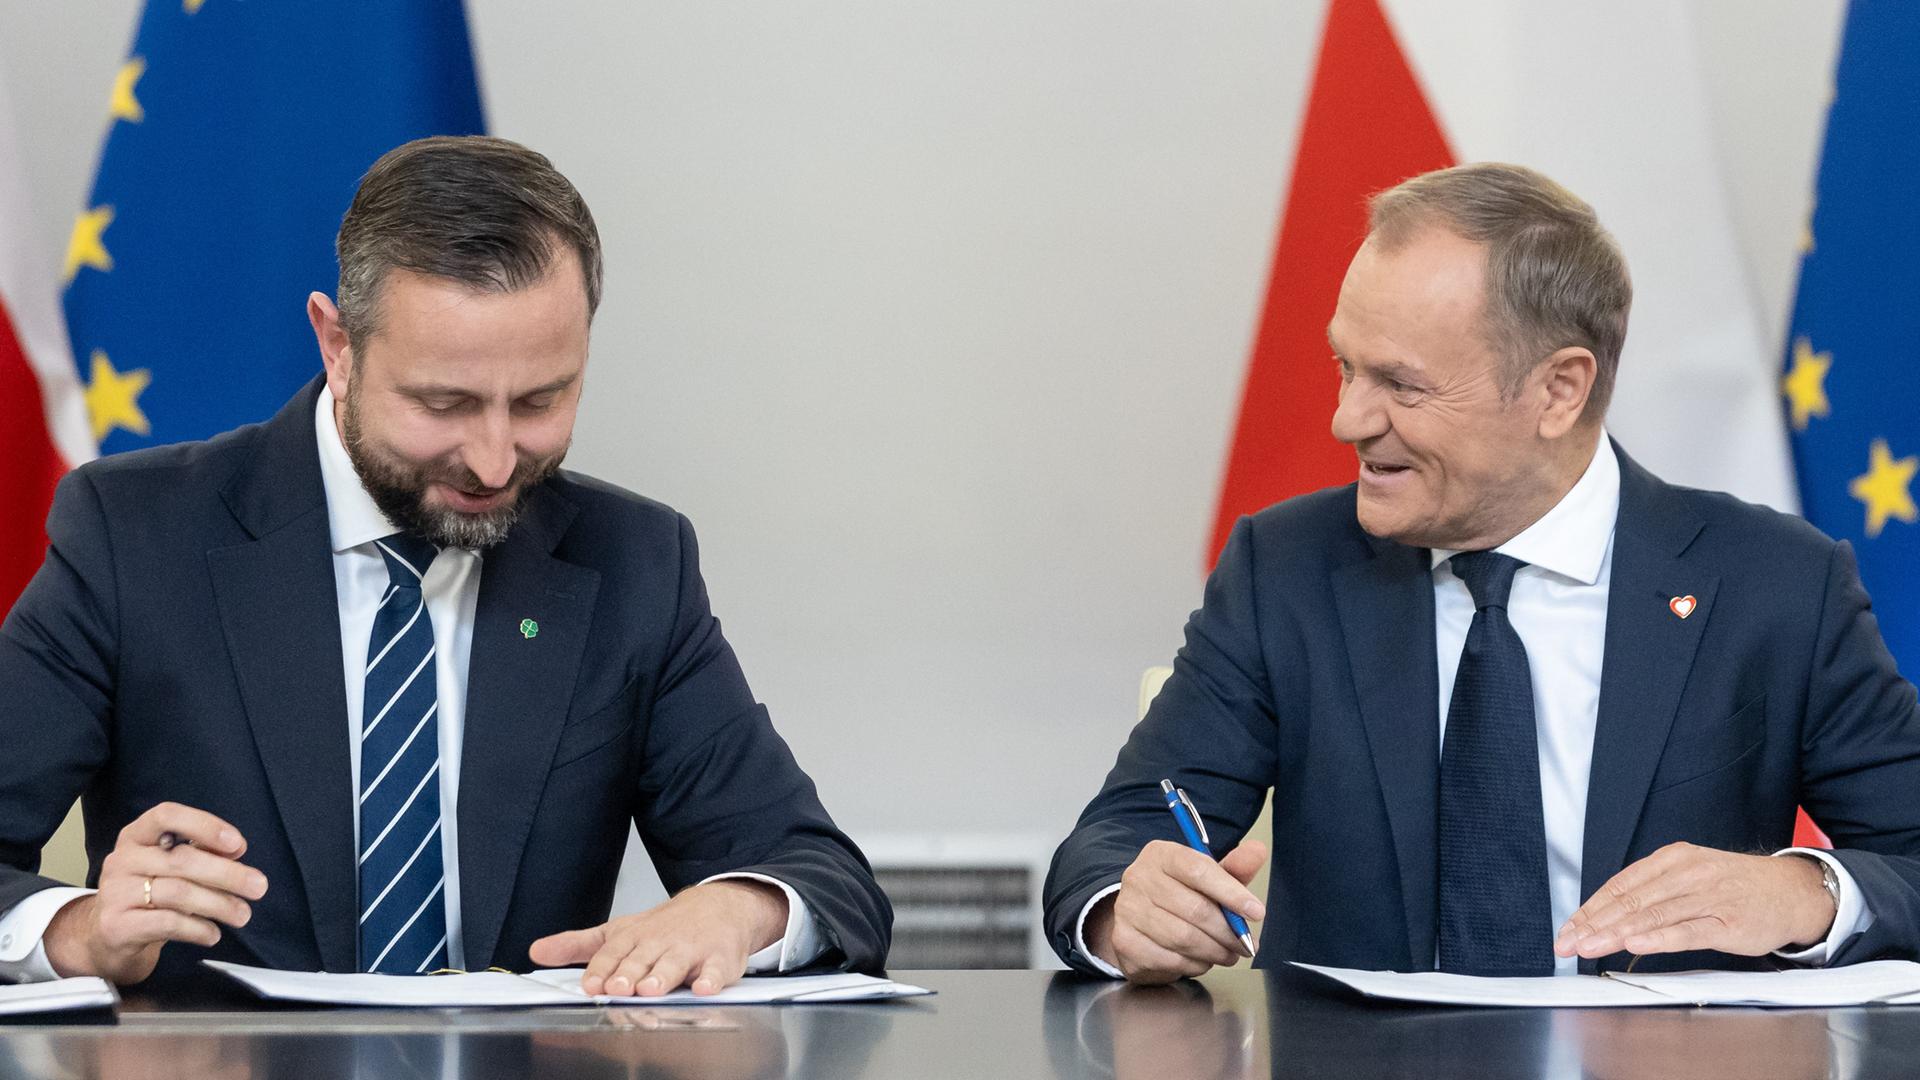 Wladyslaw Kosiniak-Kamysz und Donald Tusk unterschreiben den Koalitionsvertrag.